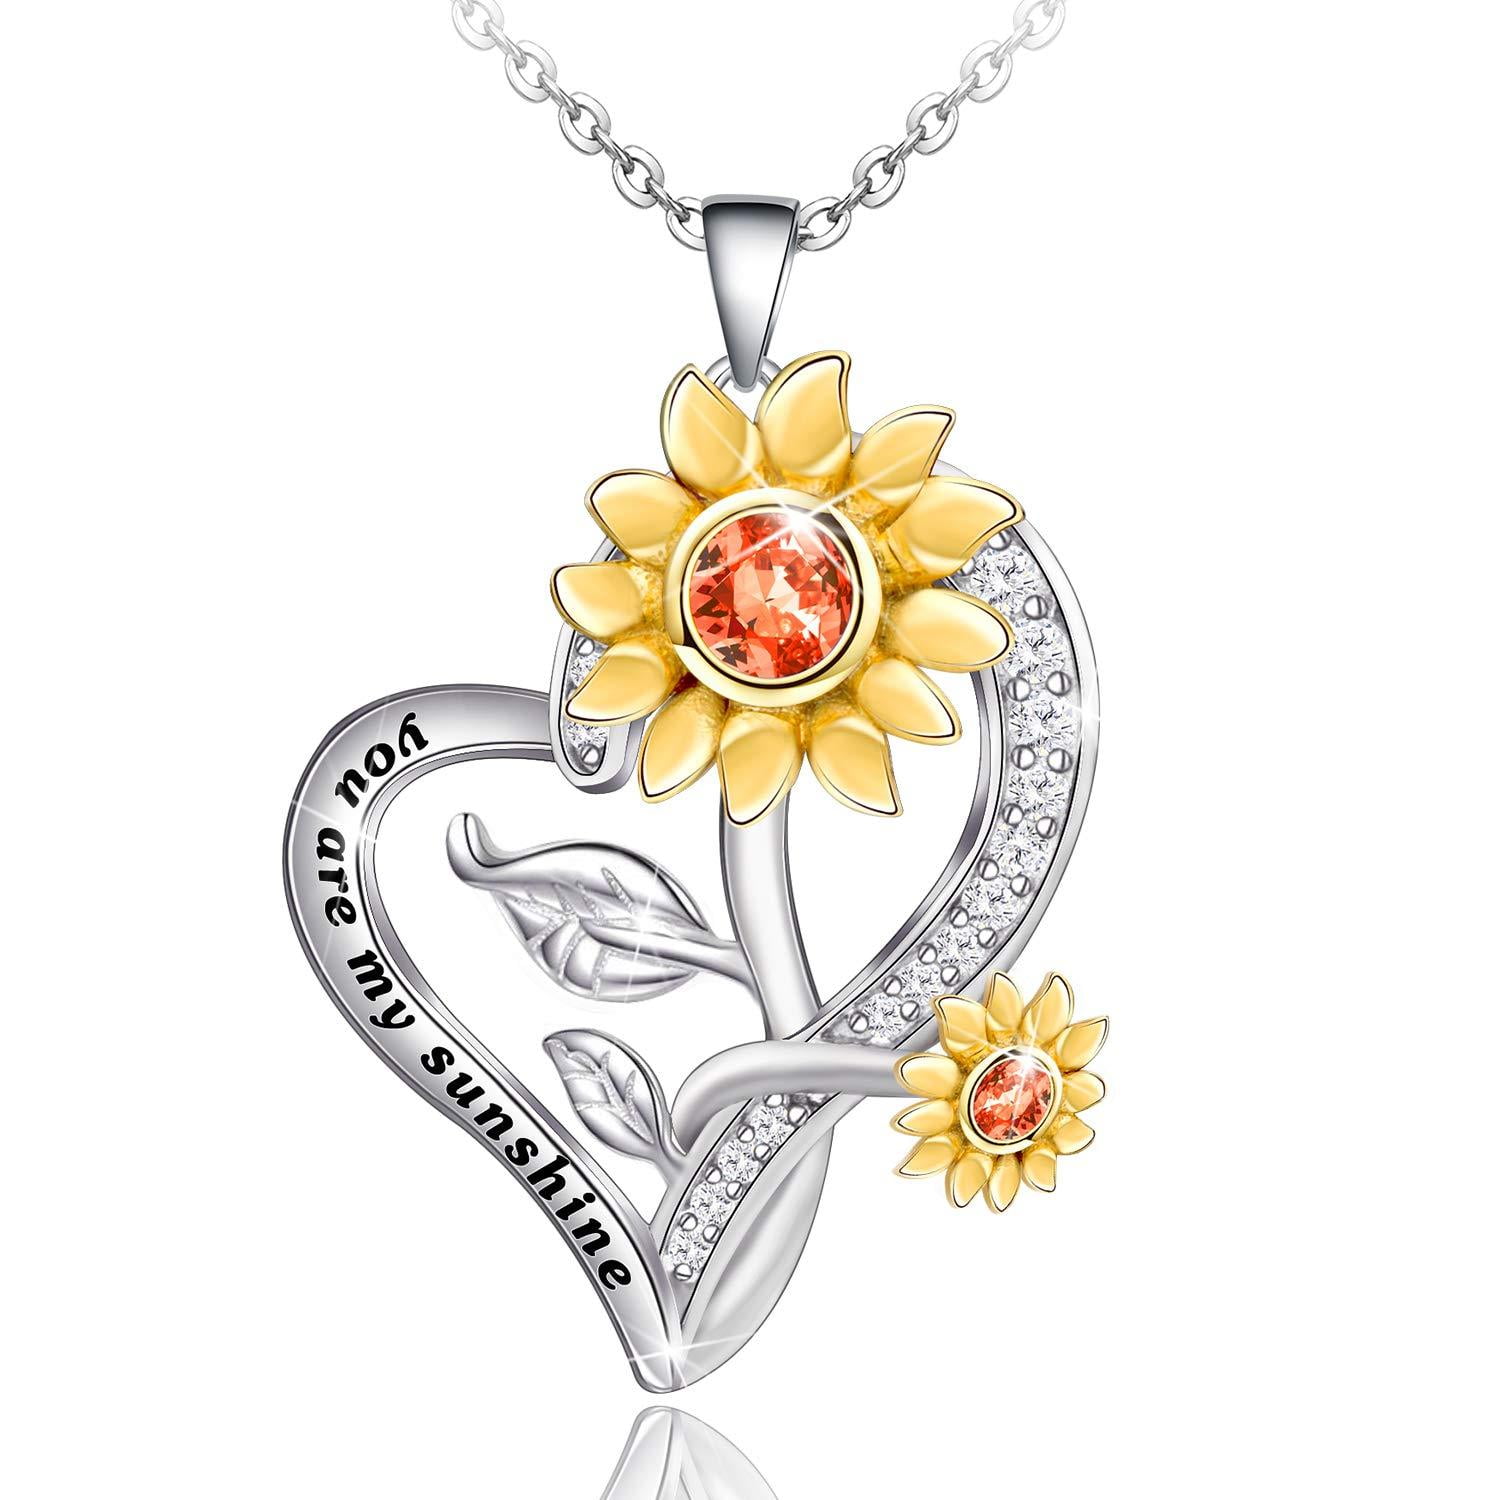 925 Silver White Topaz Cross Necklace Pendant Chain Choker Gift Woman Sunny